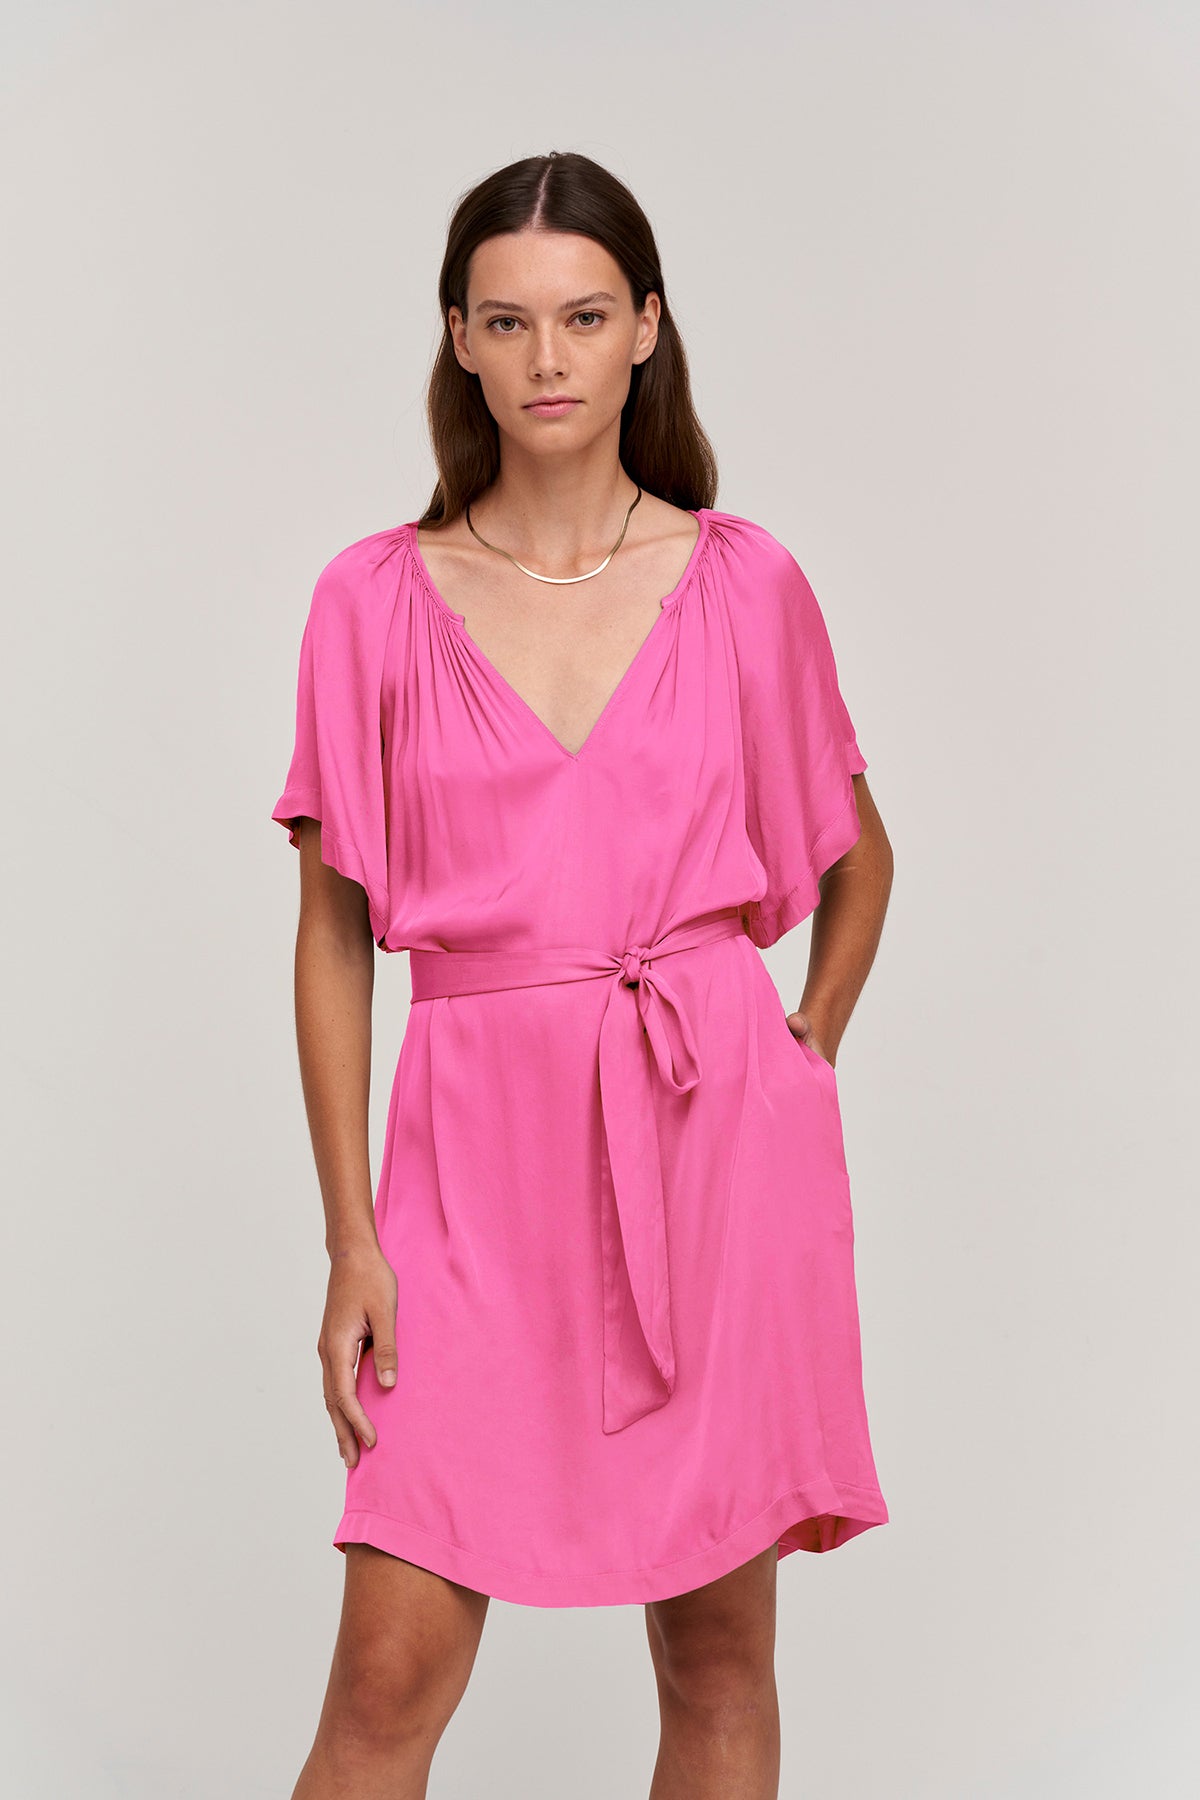 Suzanna satin viscose dress in candy pink.-24782595489985